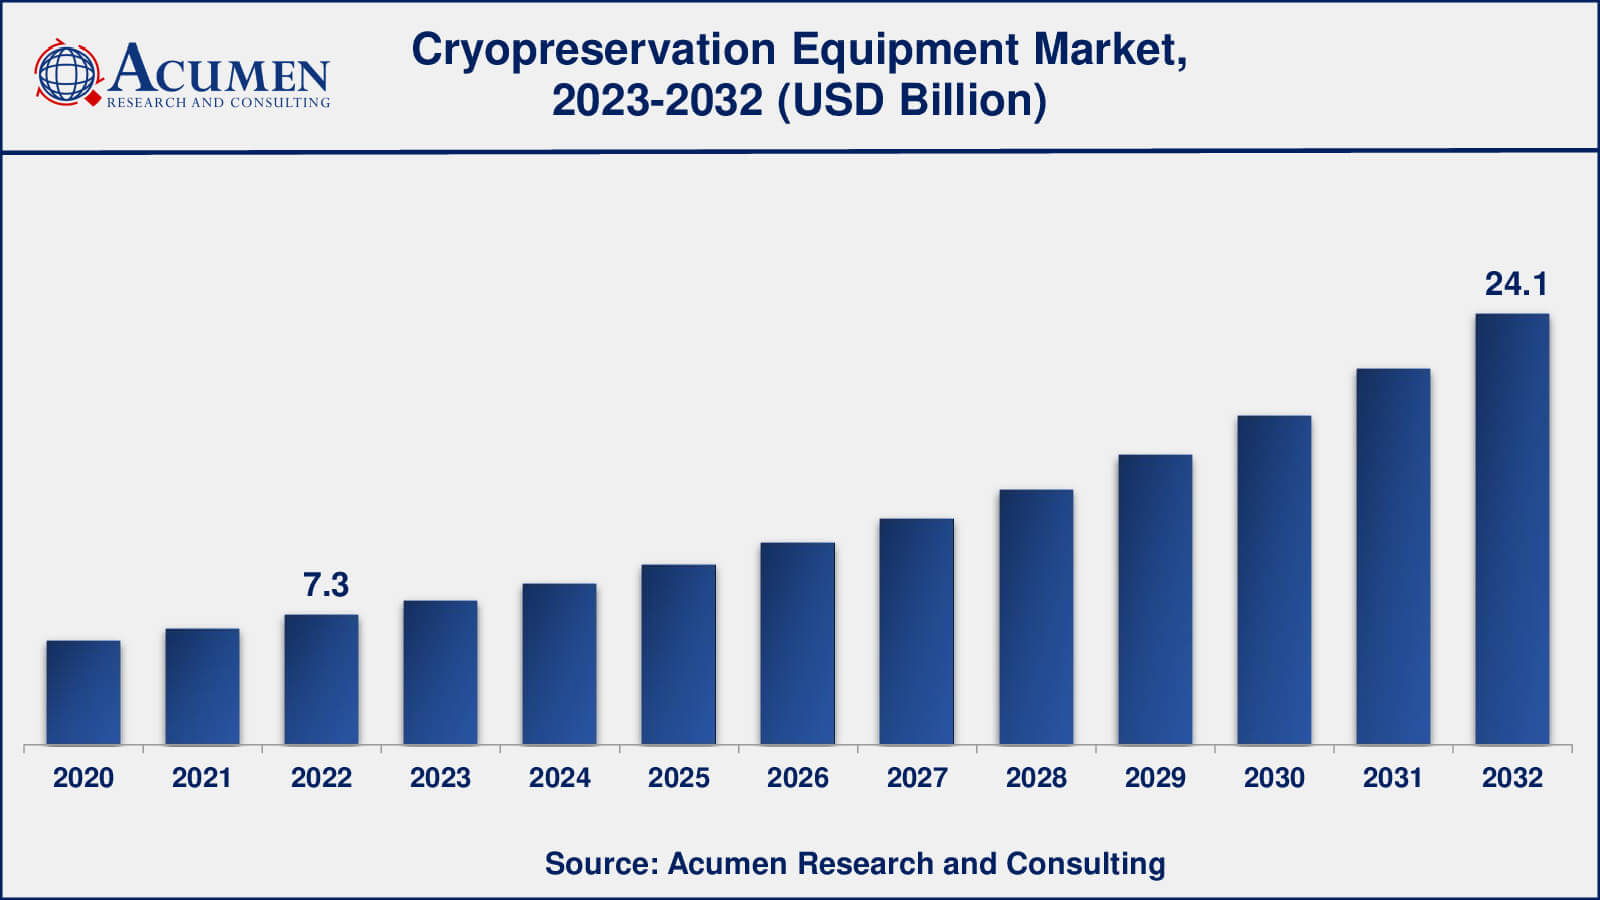 Cryopreservation Equipment Market Drivers